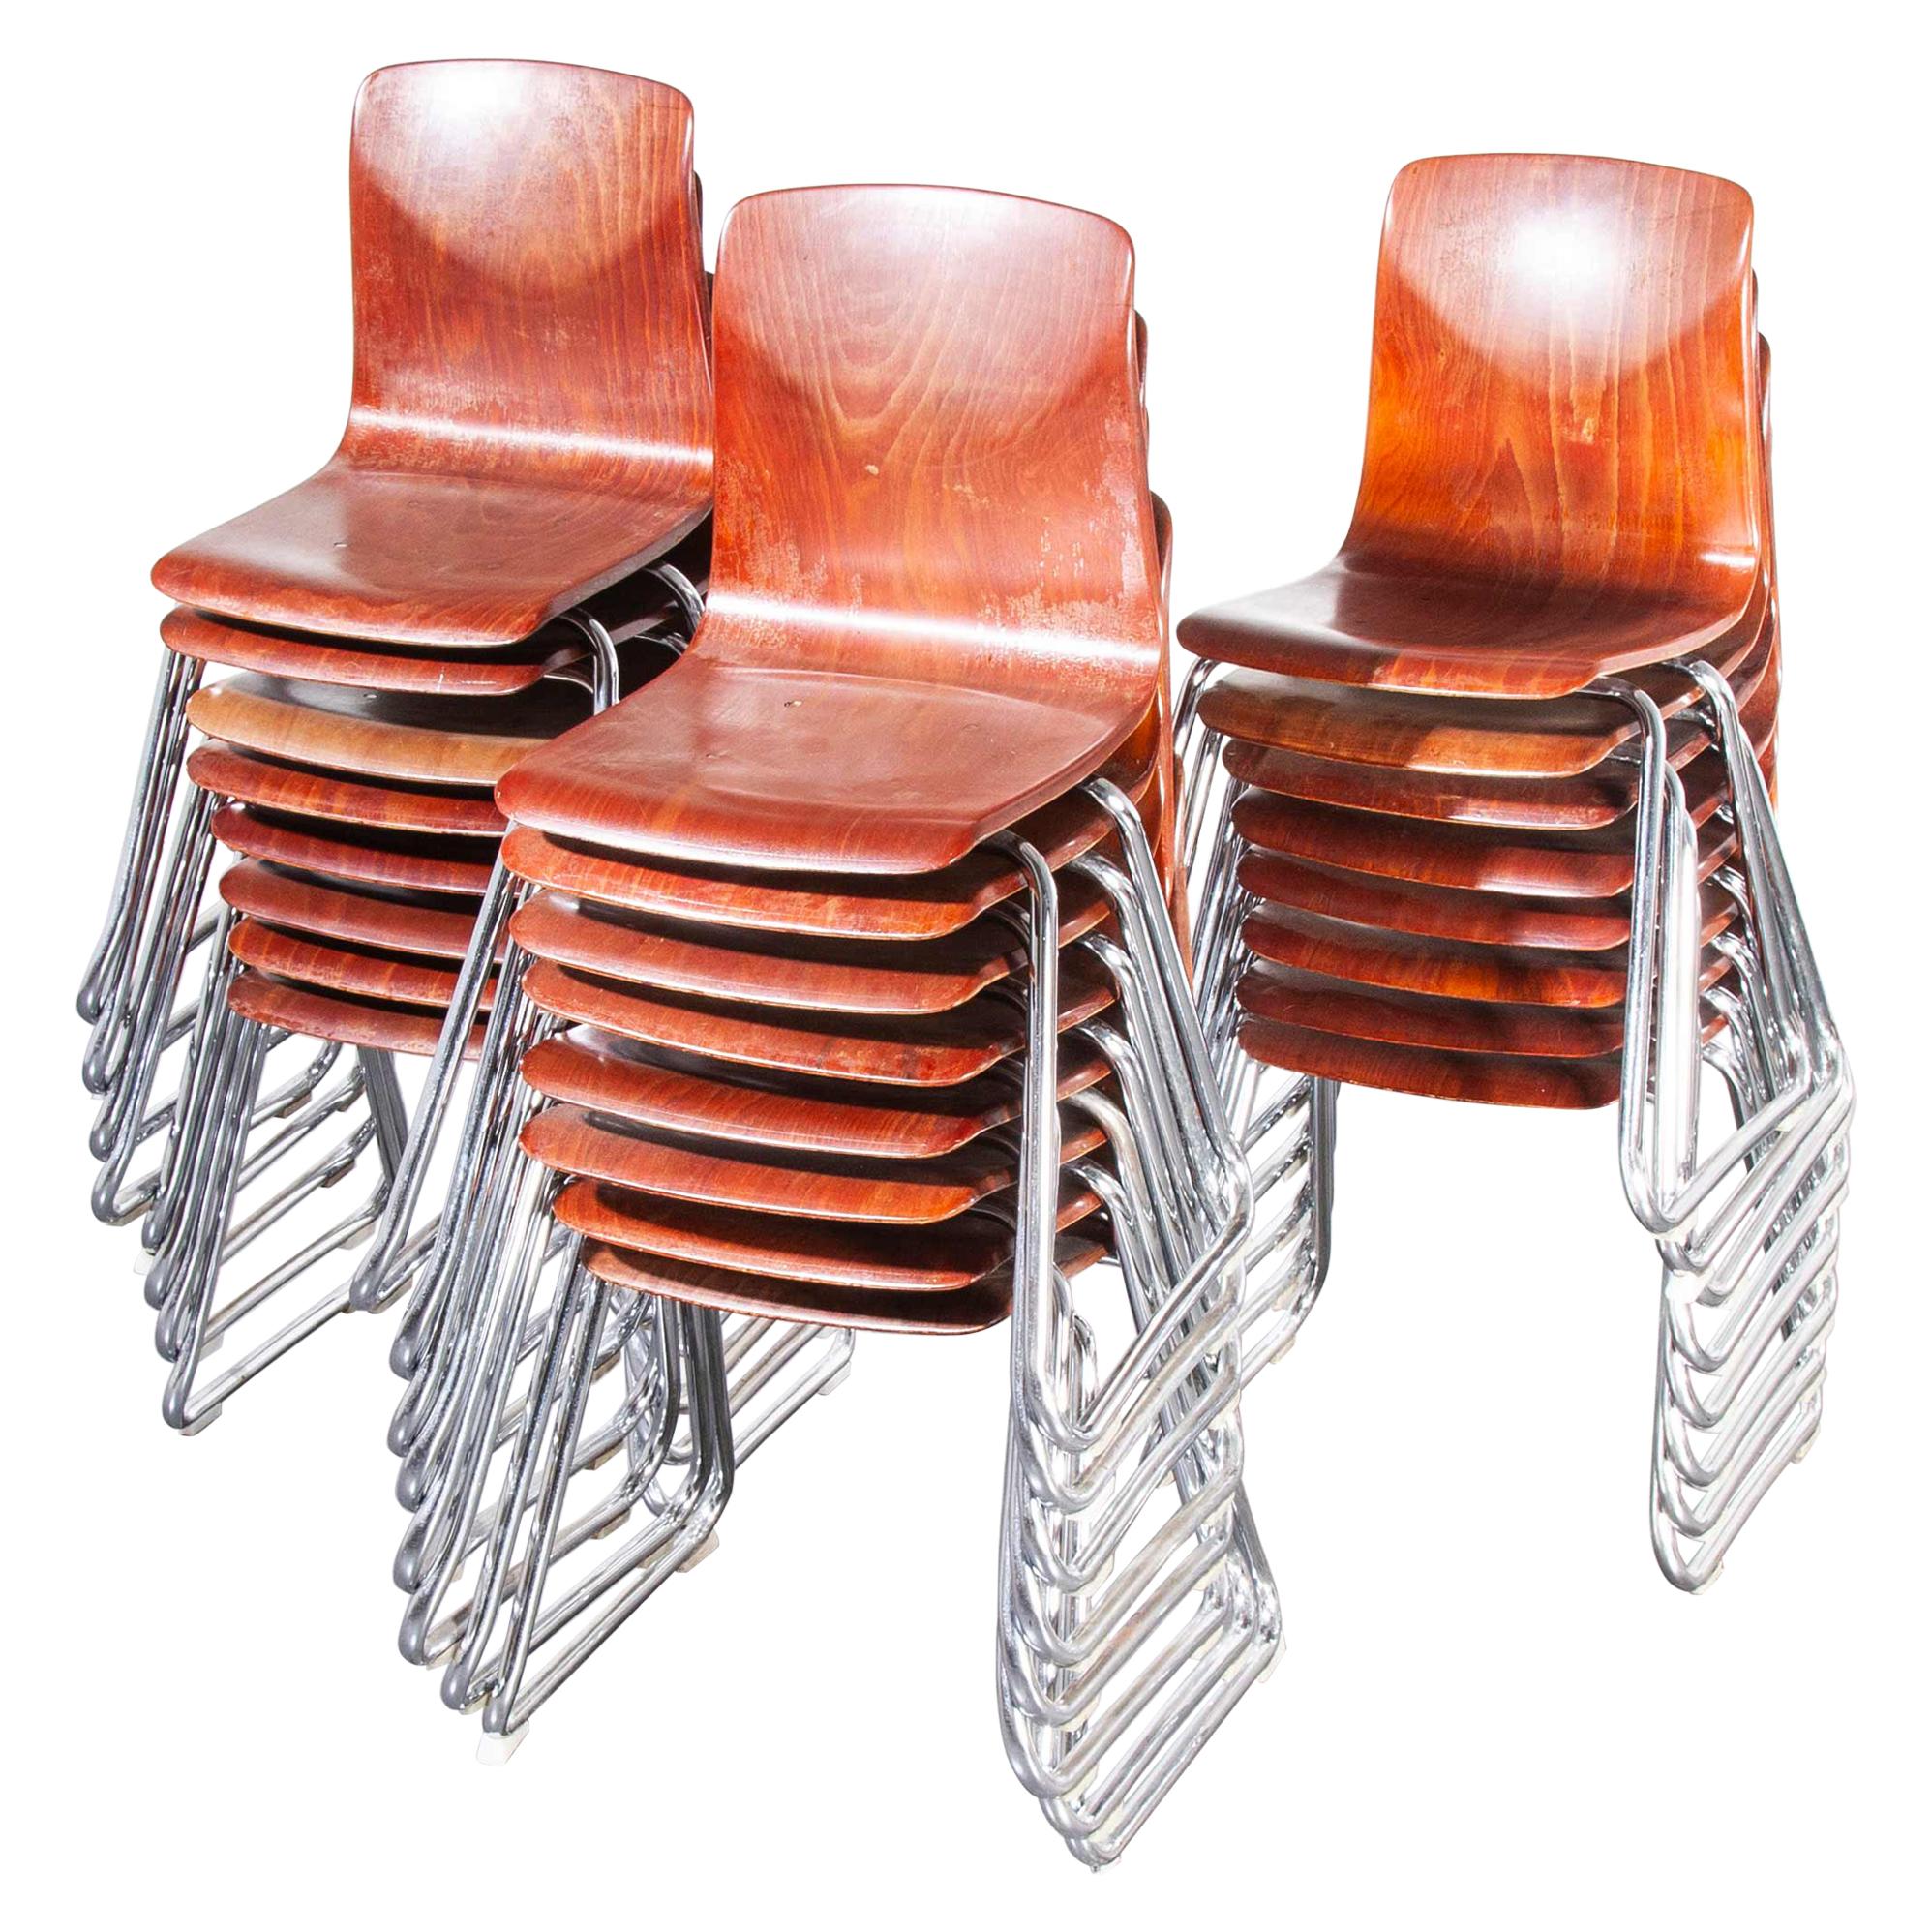 1960s Pagholz Dining Chairs Laminated Hardwood Chrome Legs, Set of Twenty Four